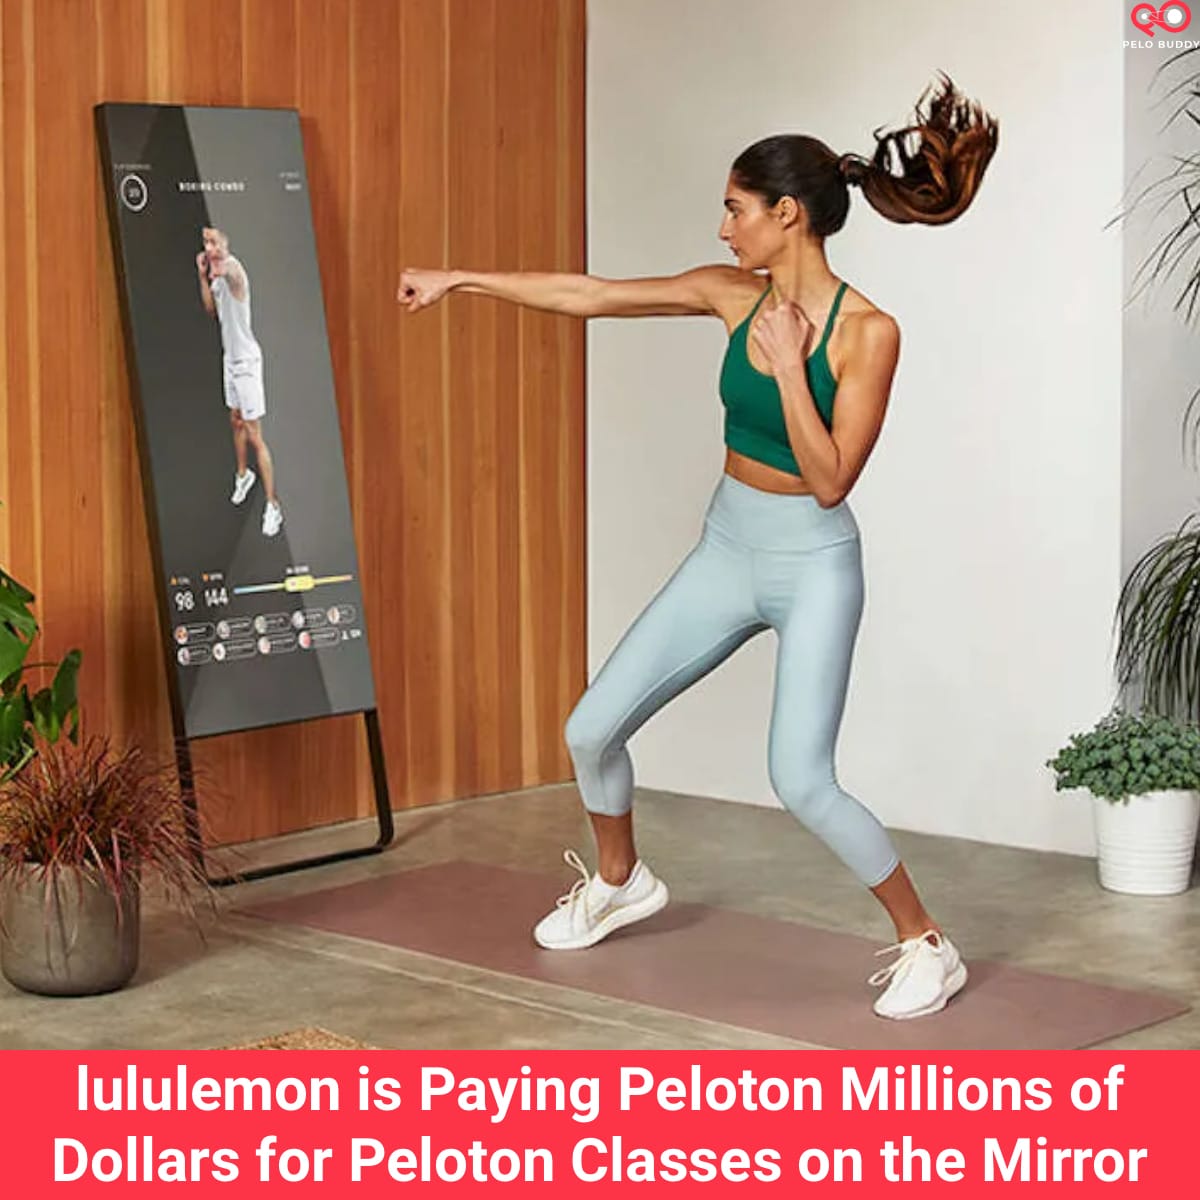 lululemon is Paying Peloton Millions of Dollars for Peloton